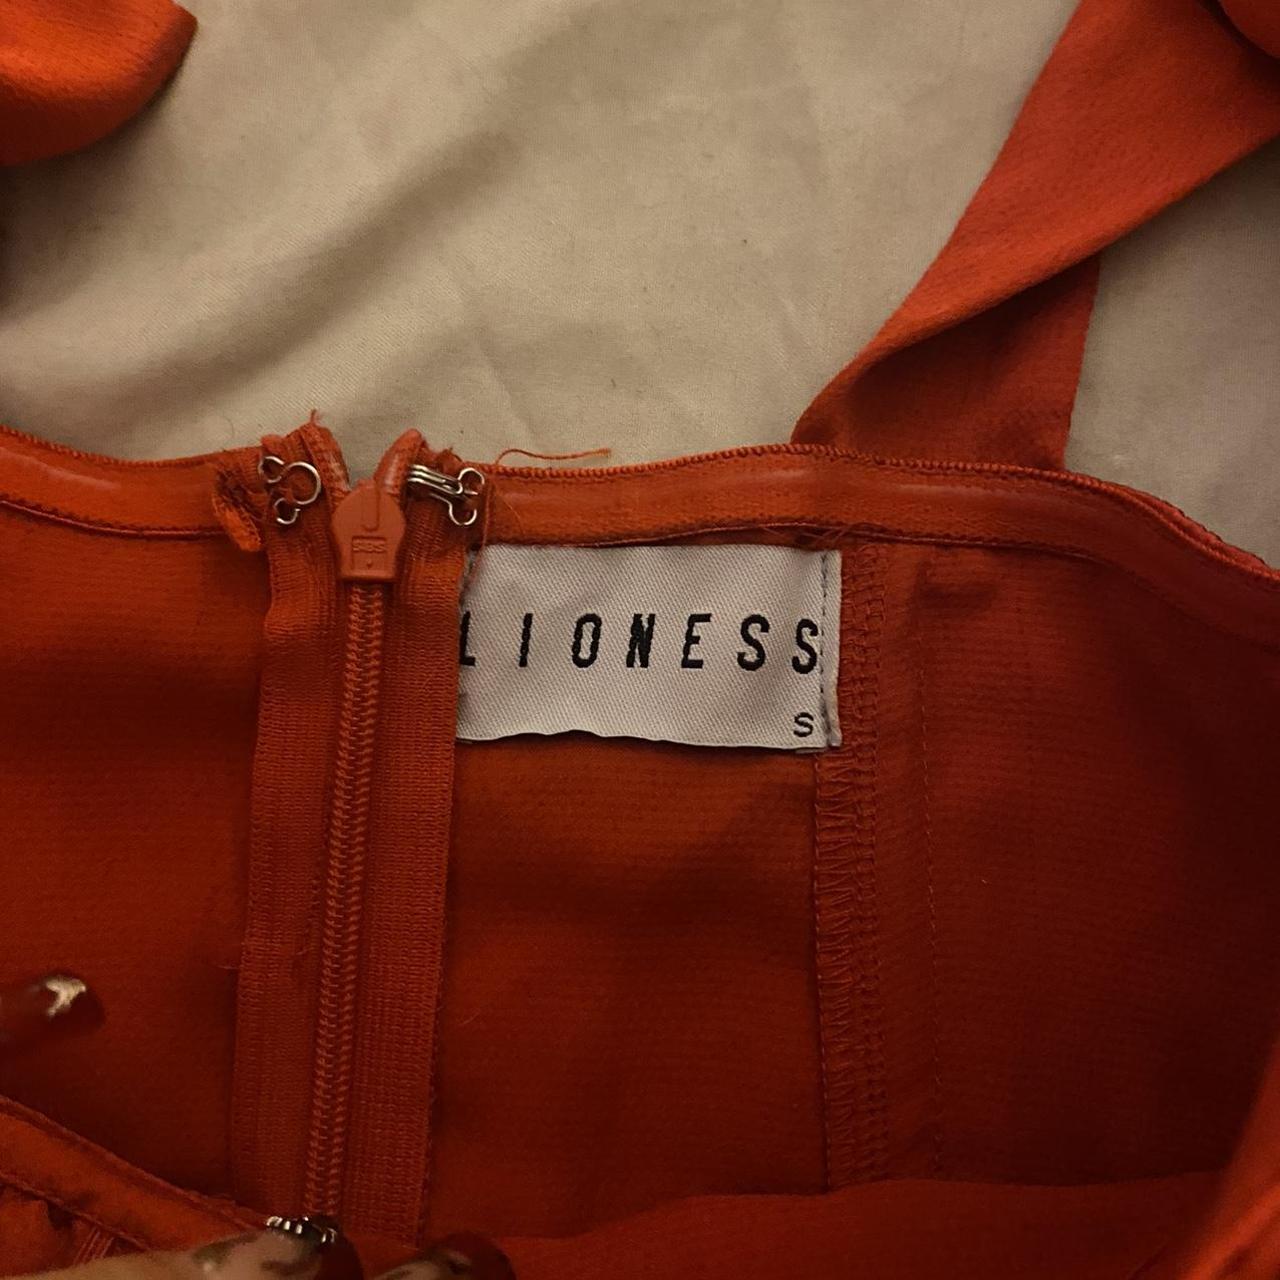 Lioness Women's Corset (2)